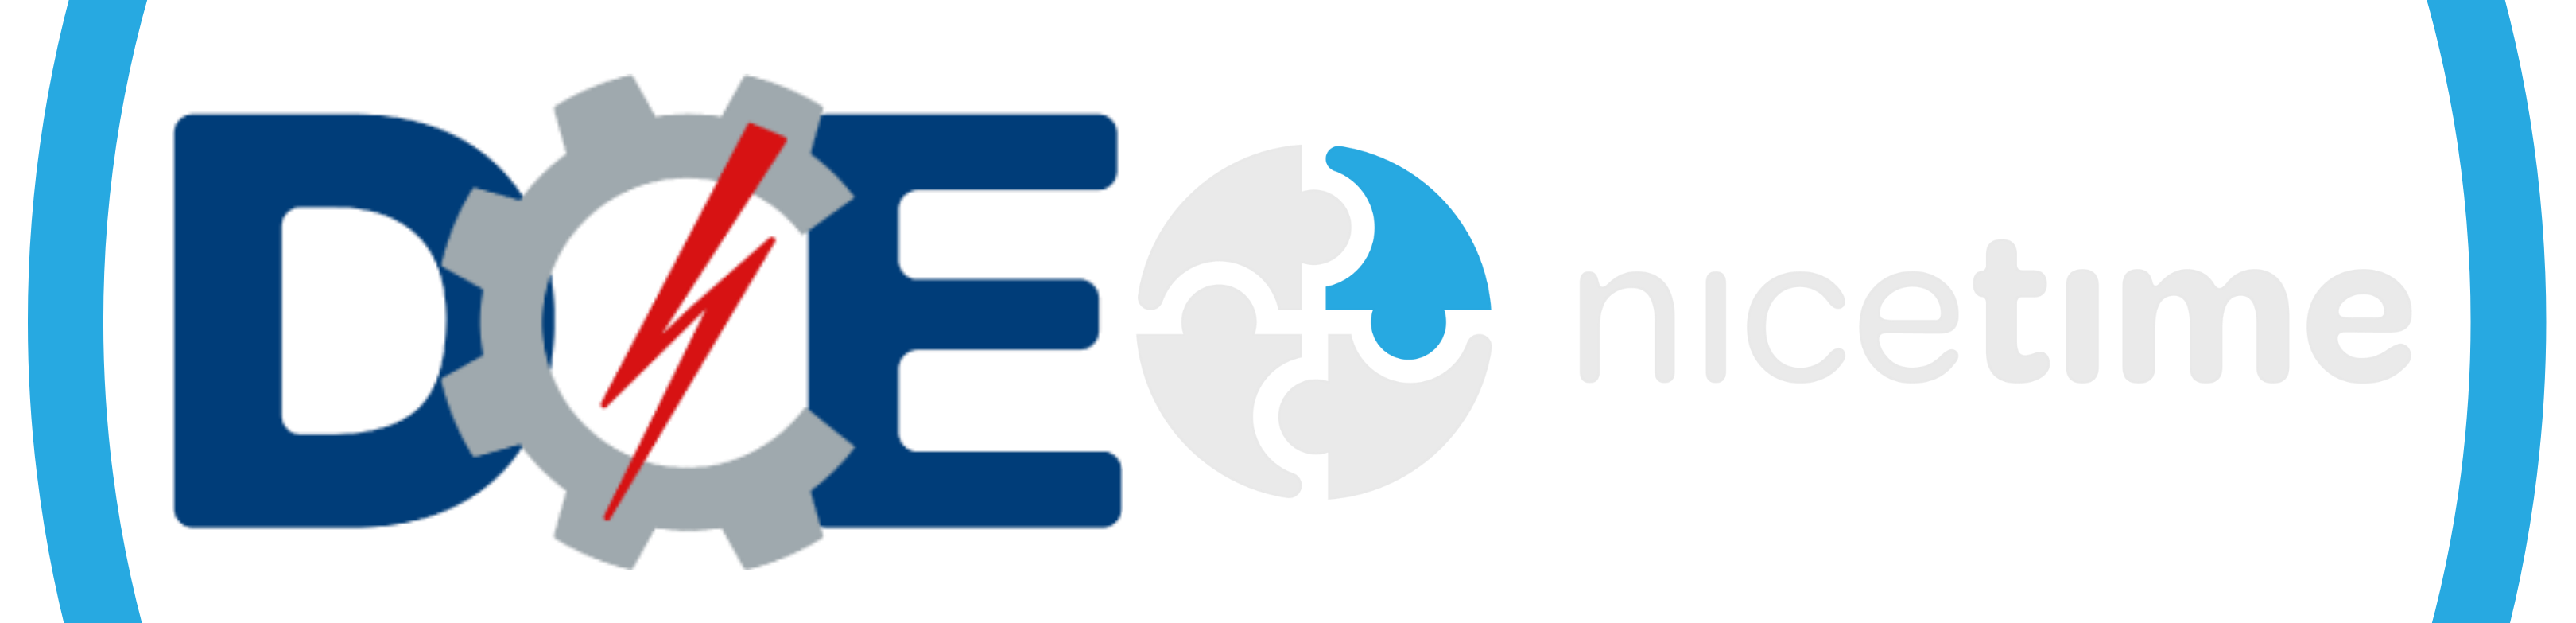 DCE-logo